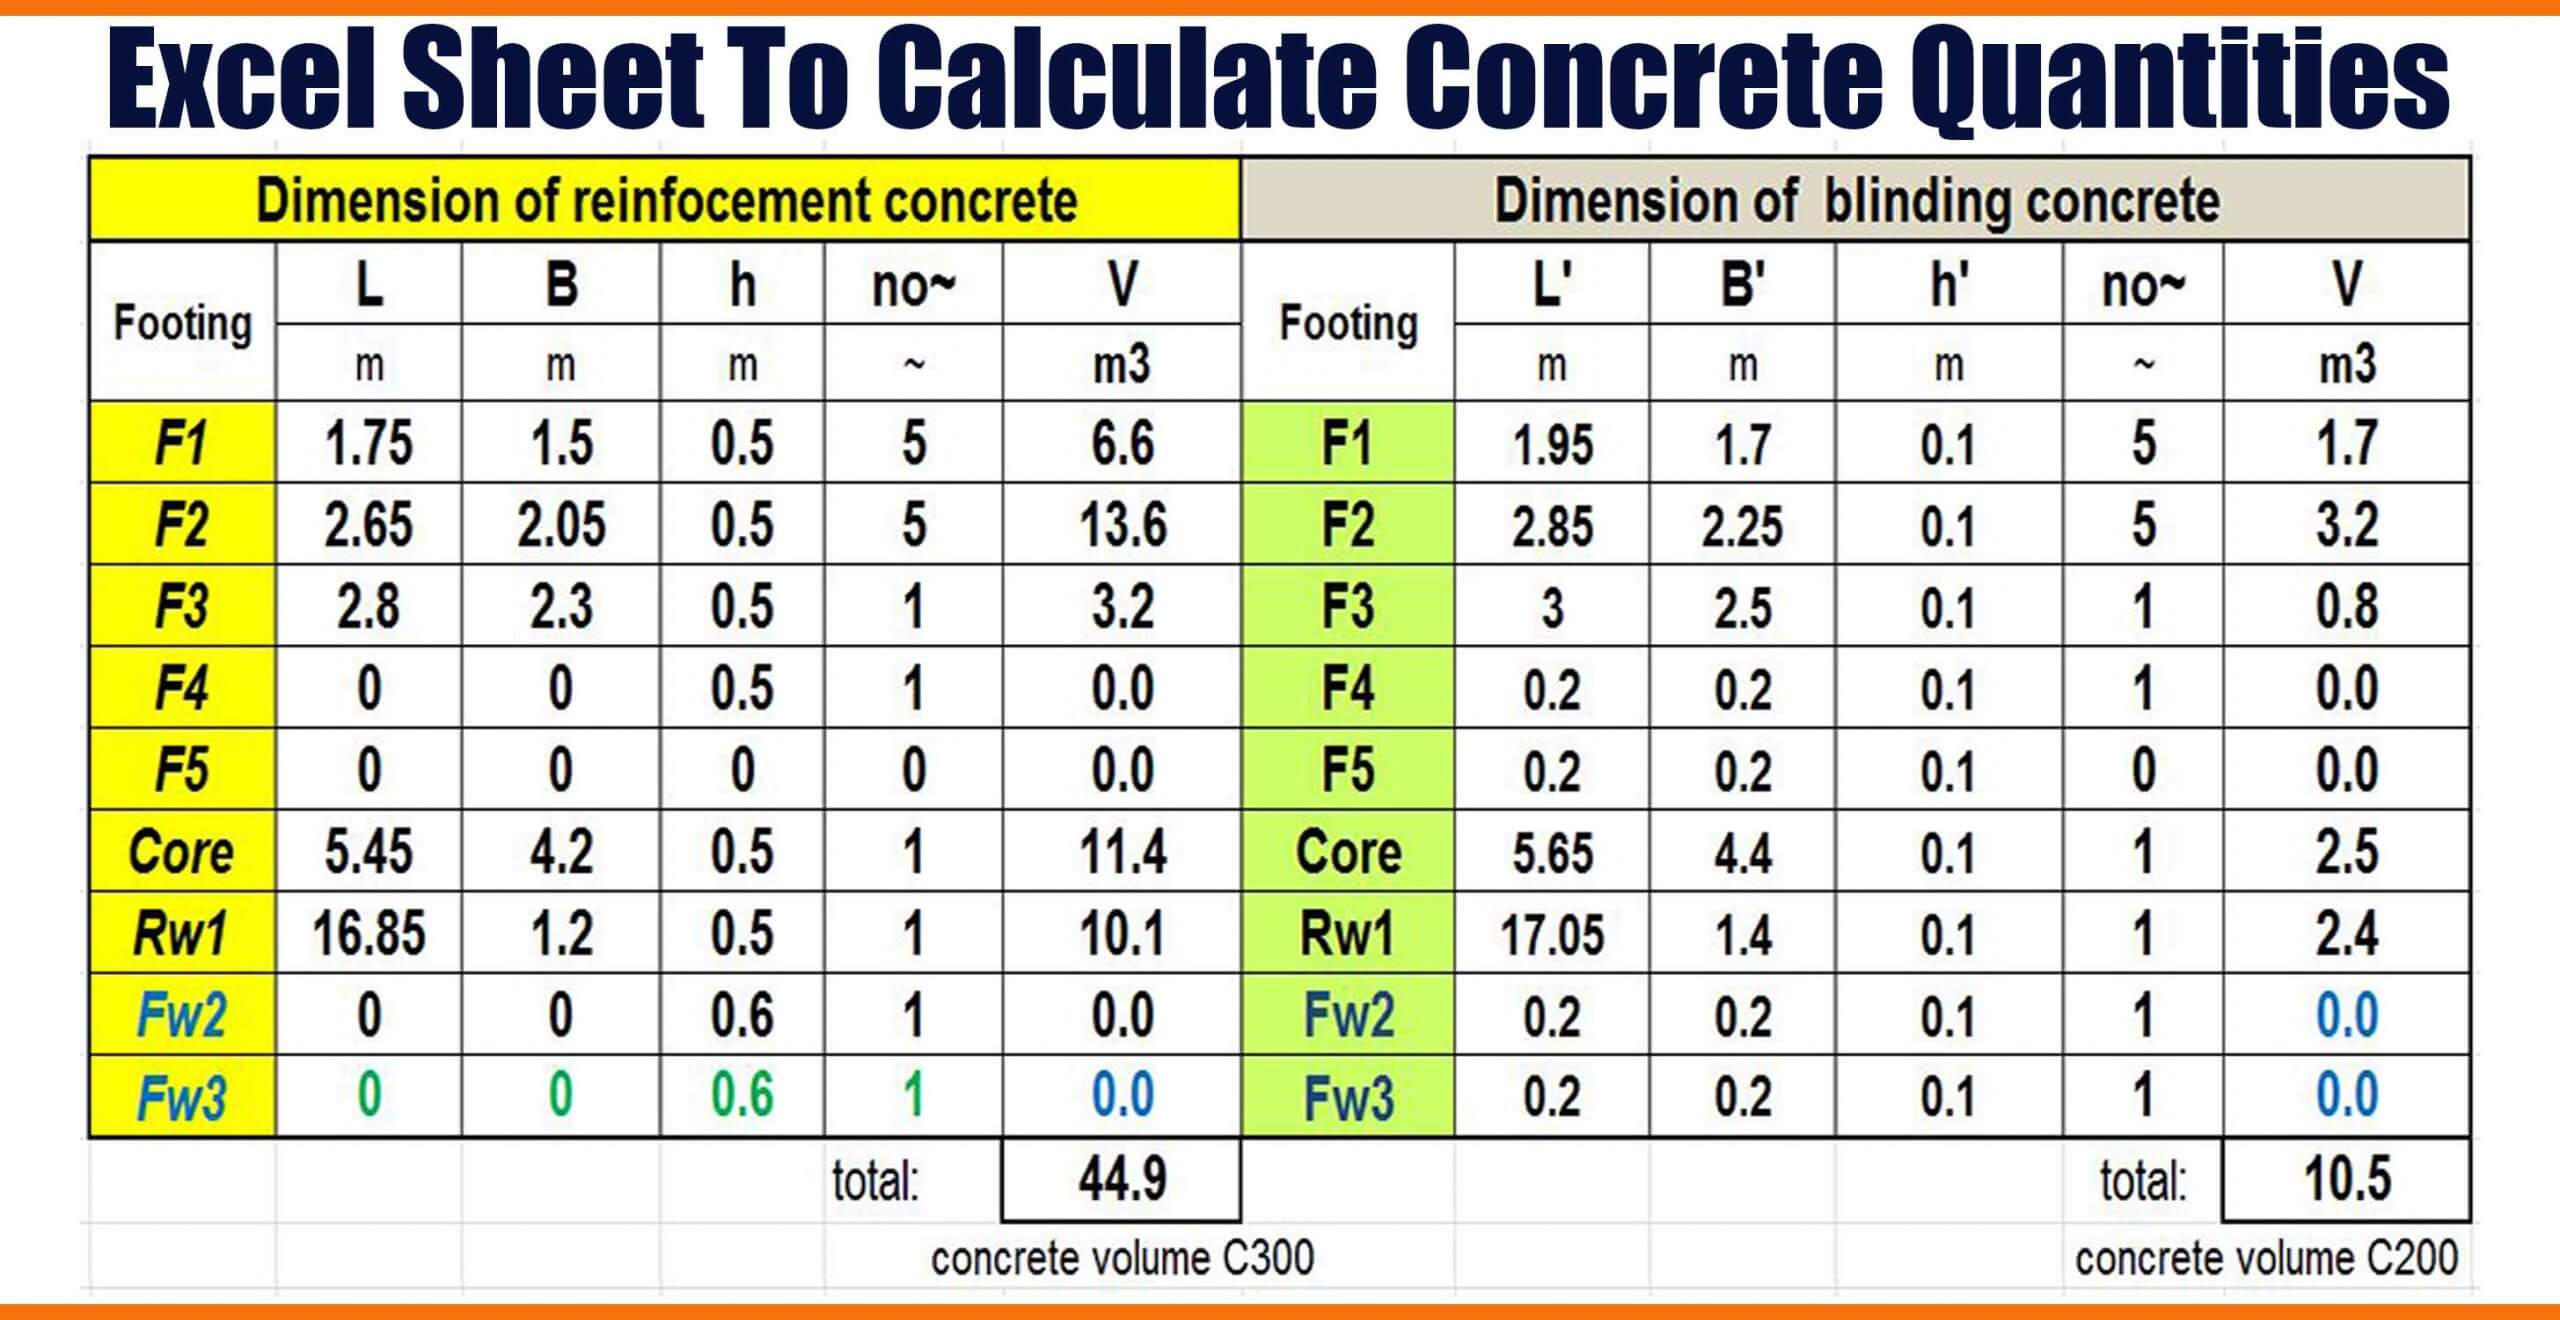 concrete block calculator